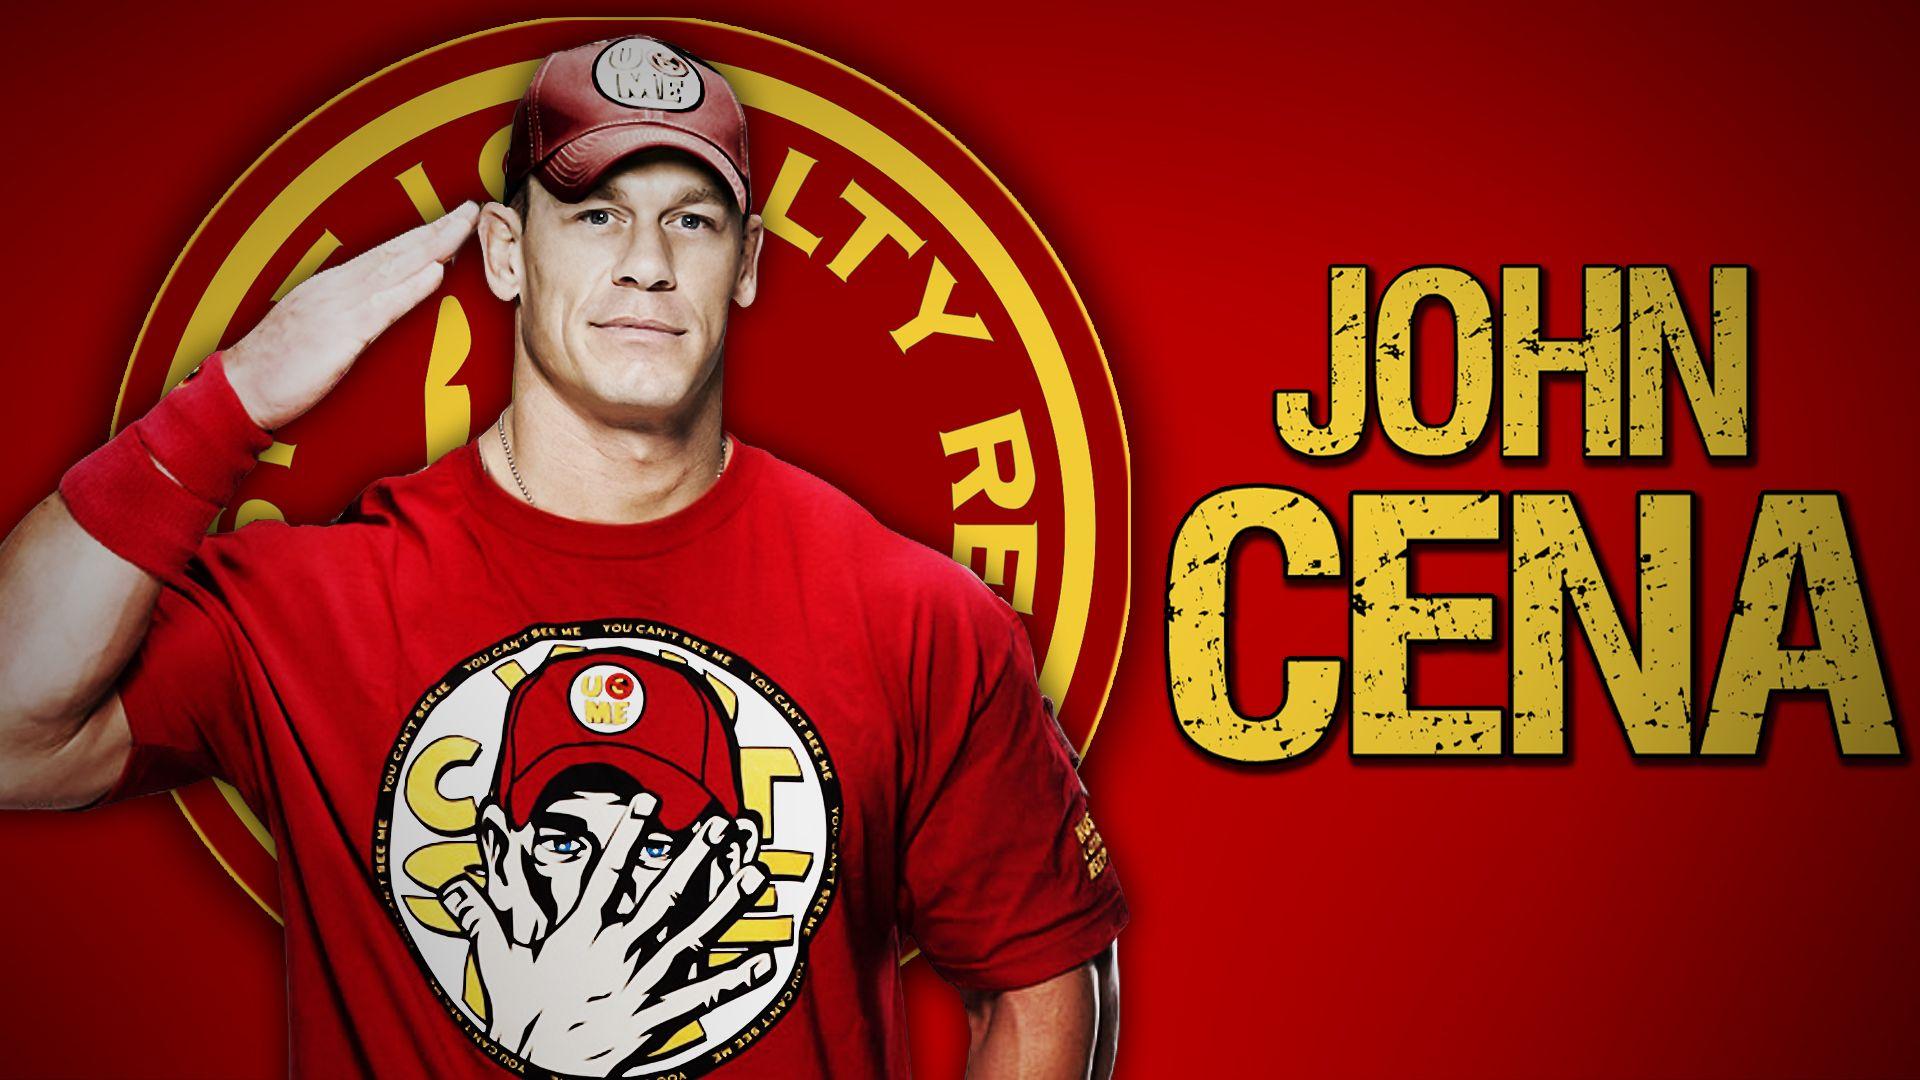 John Cena Wallpaper, Picture, Image